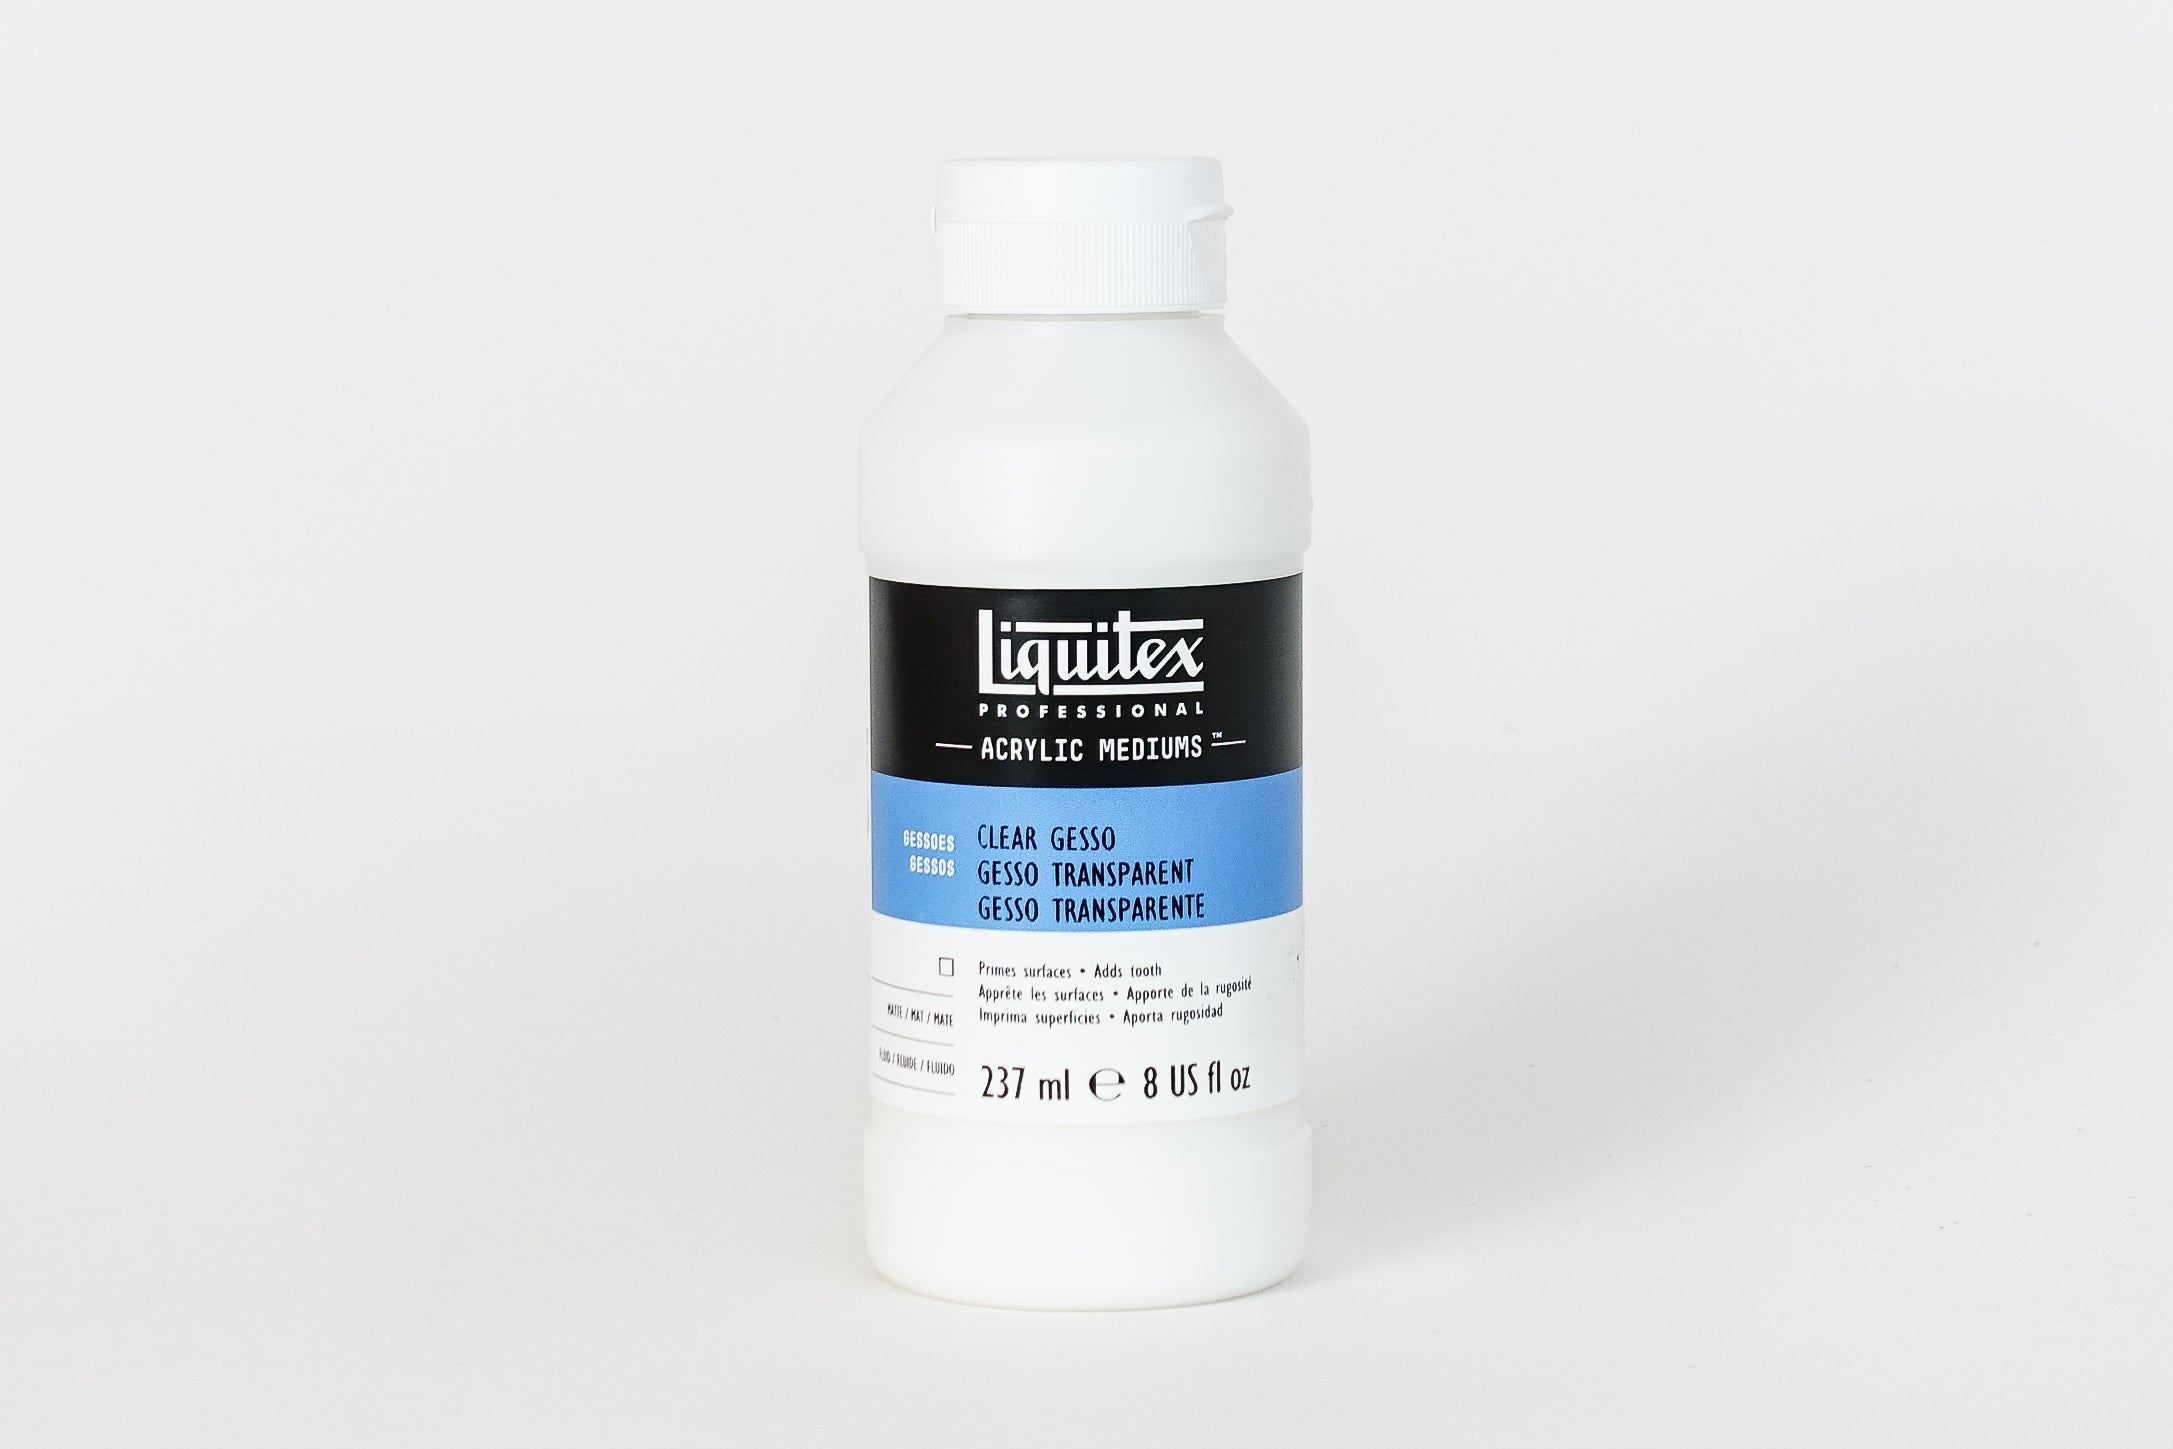 Liquitex Professional Acrylic Medium Silkscreen Medium